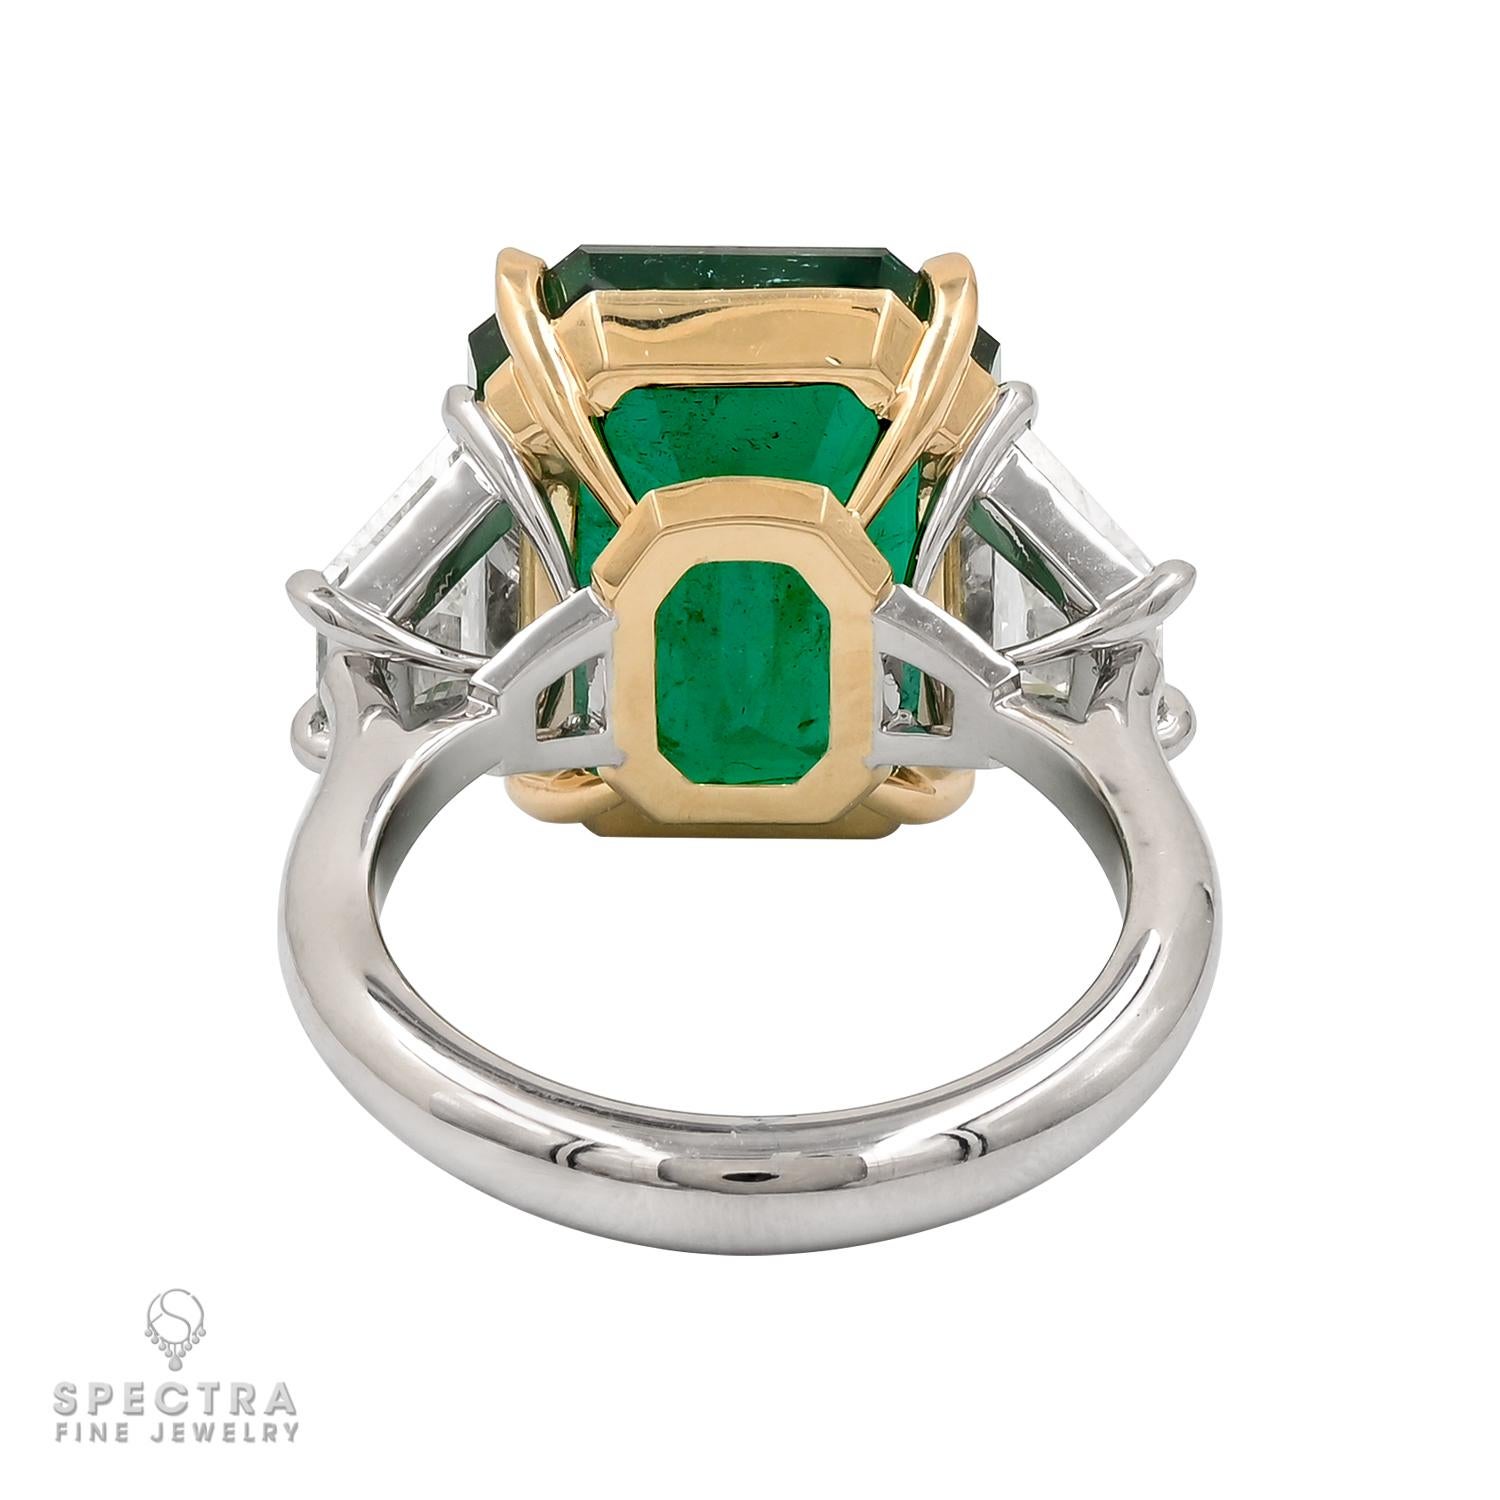 Contemporary Spectra Fine Jewelry 11.68 Carat Zambian Emerald Diamond Ring For Sale